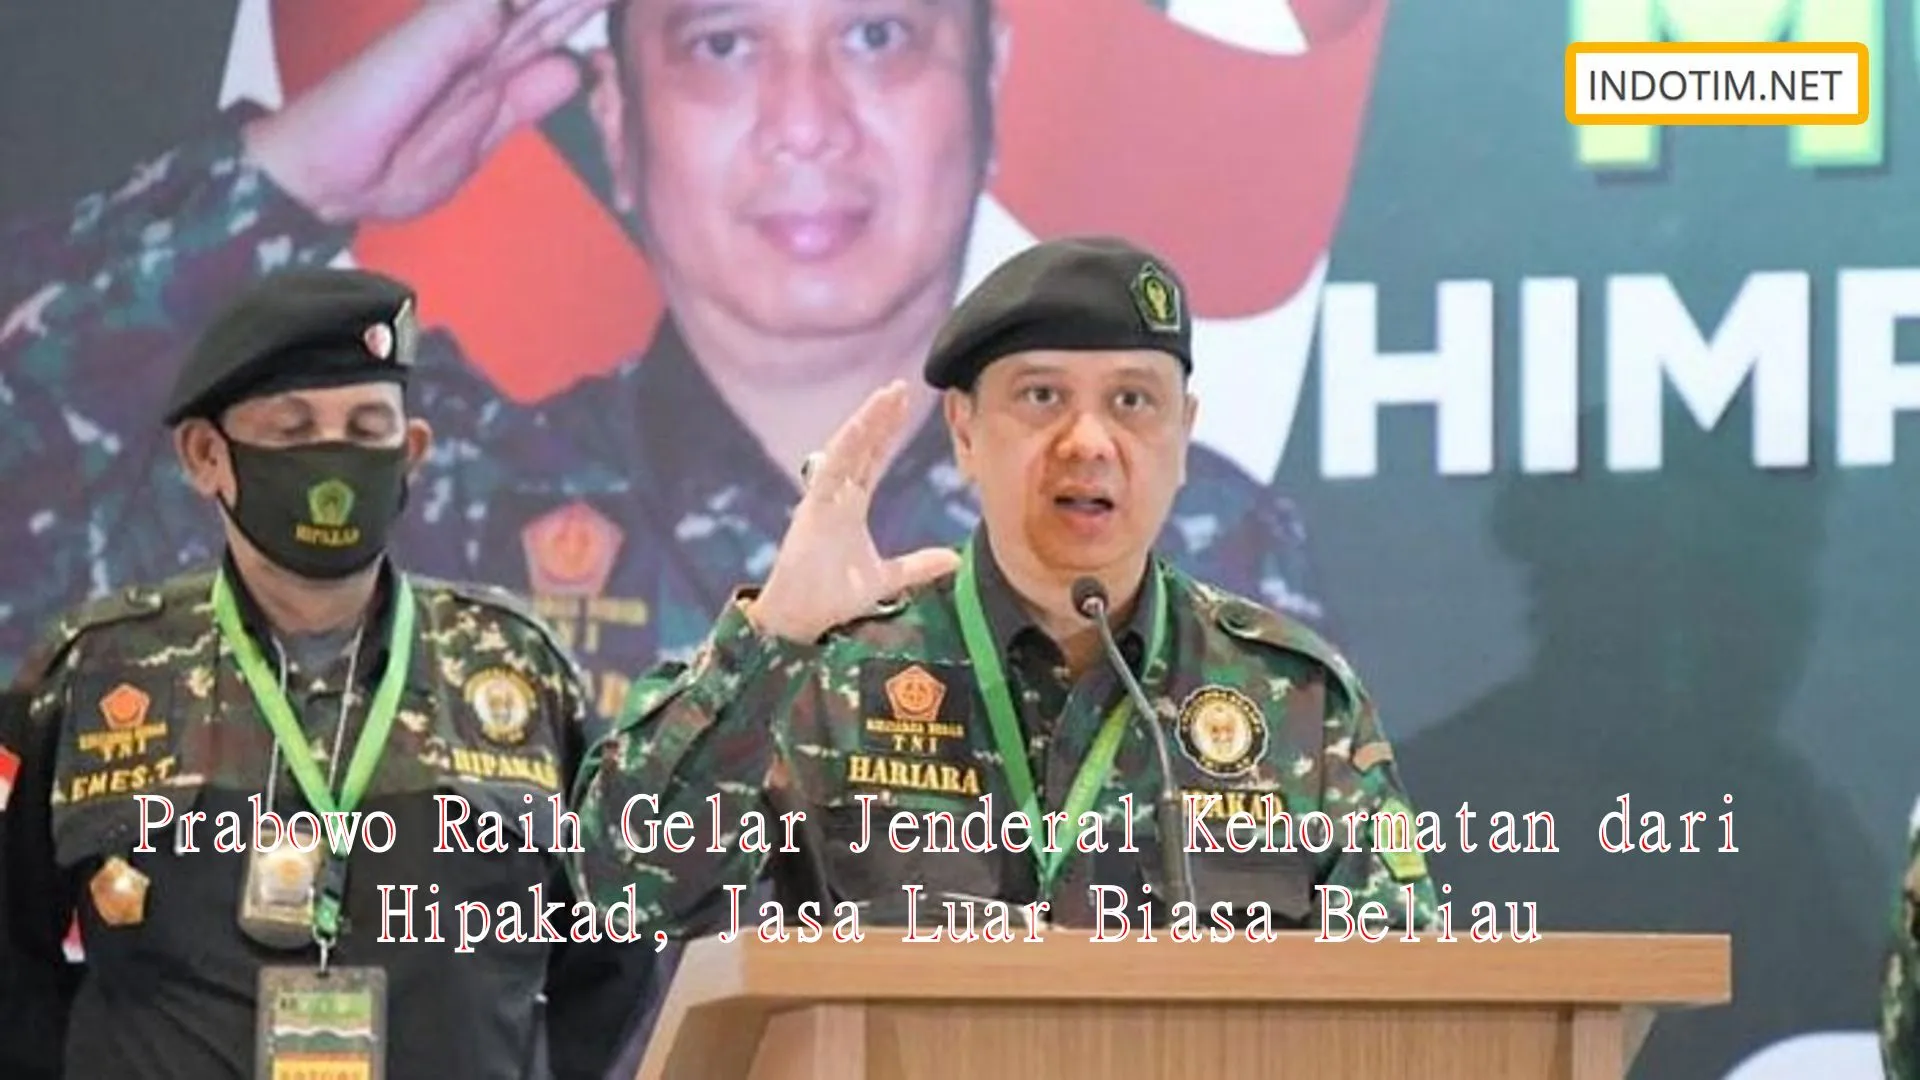 Prabowo Raih Gelar Jenderal Kehormatan dari Hipakad, Jasa Luar Biasa Beliau